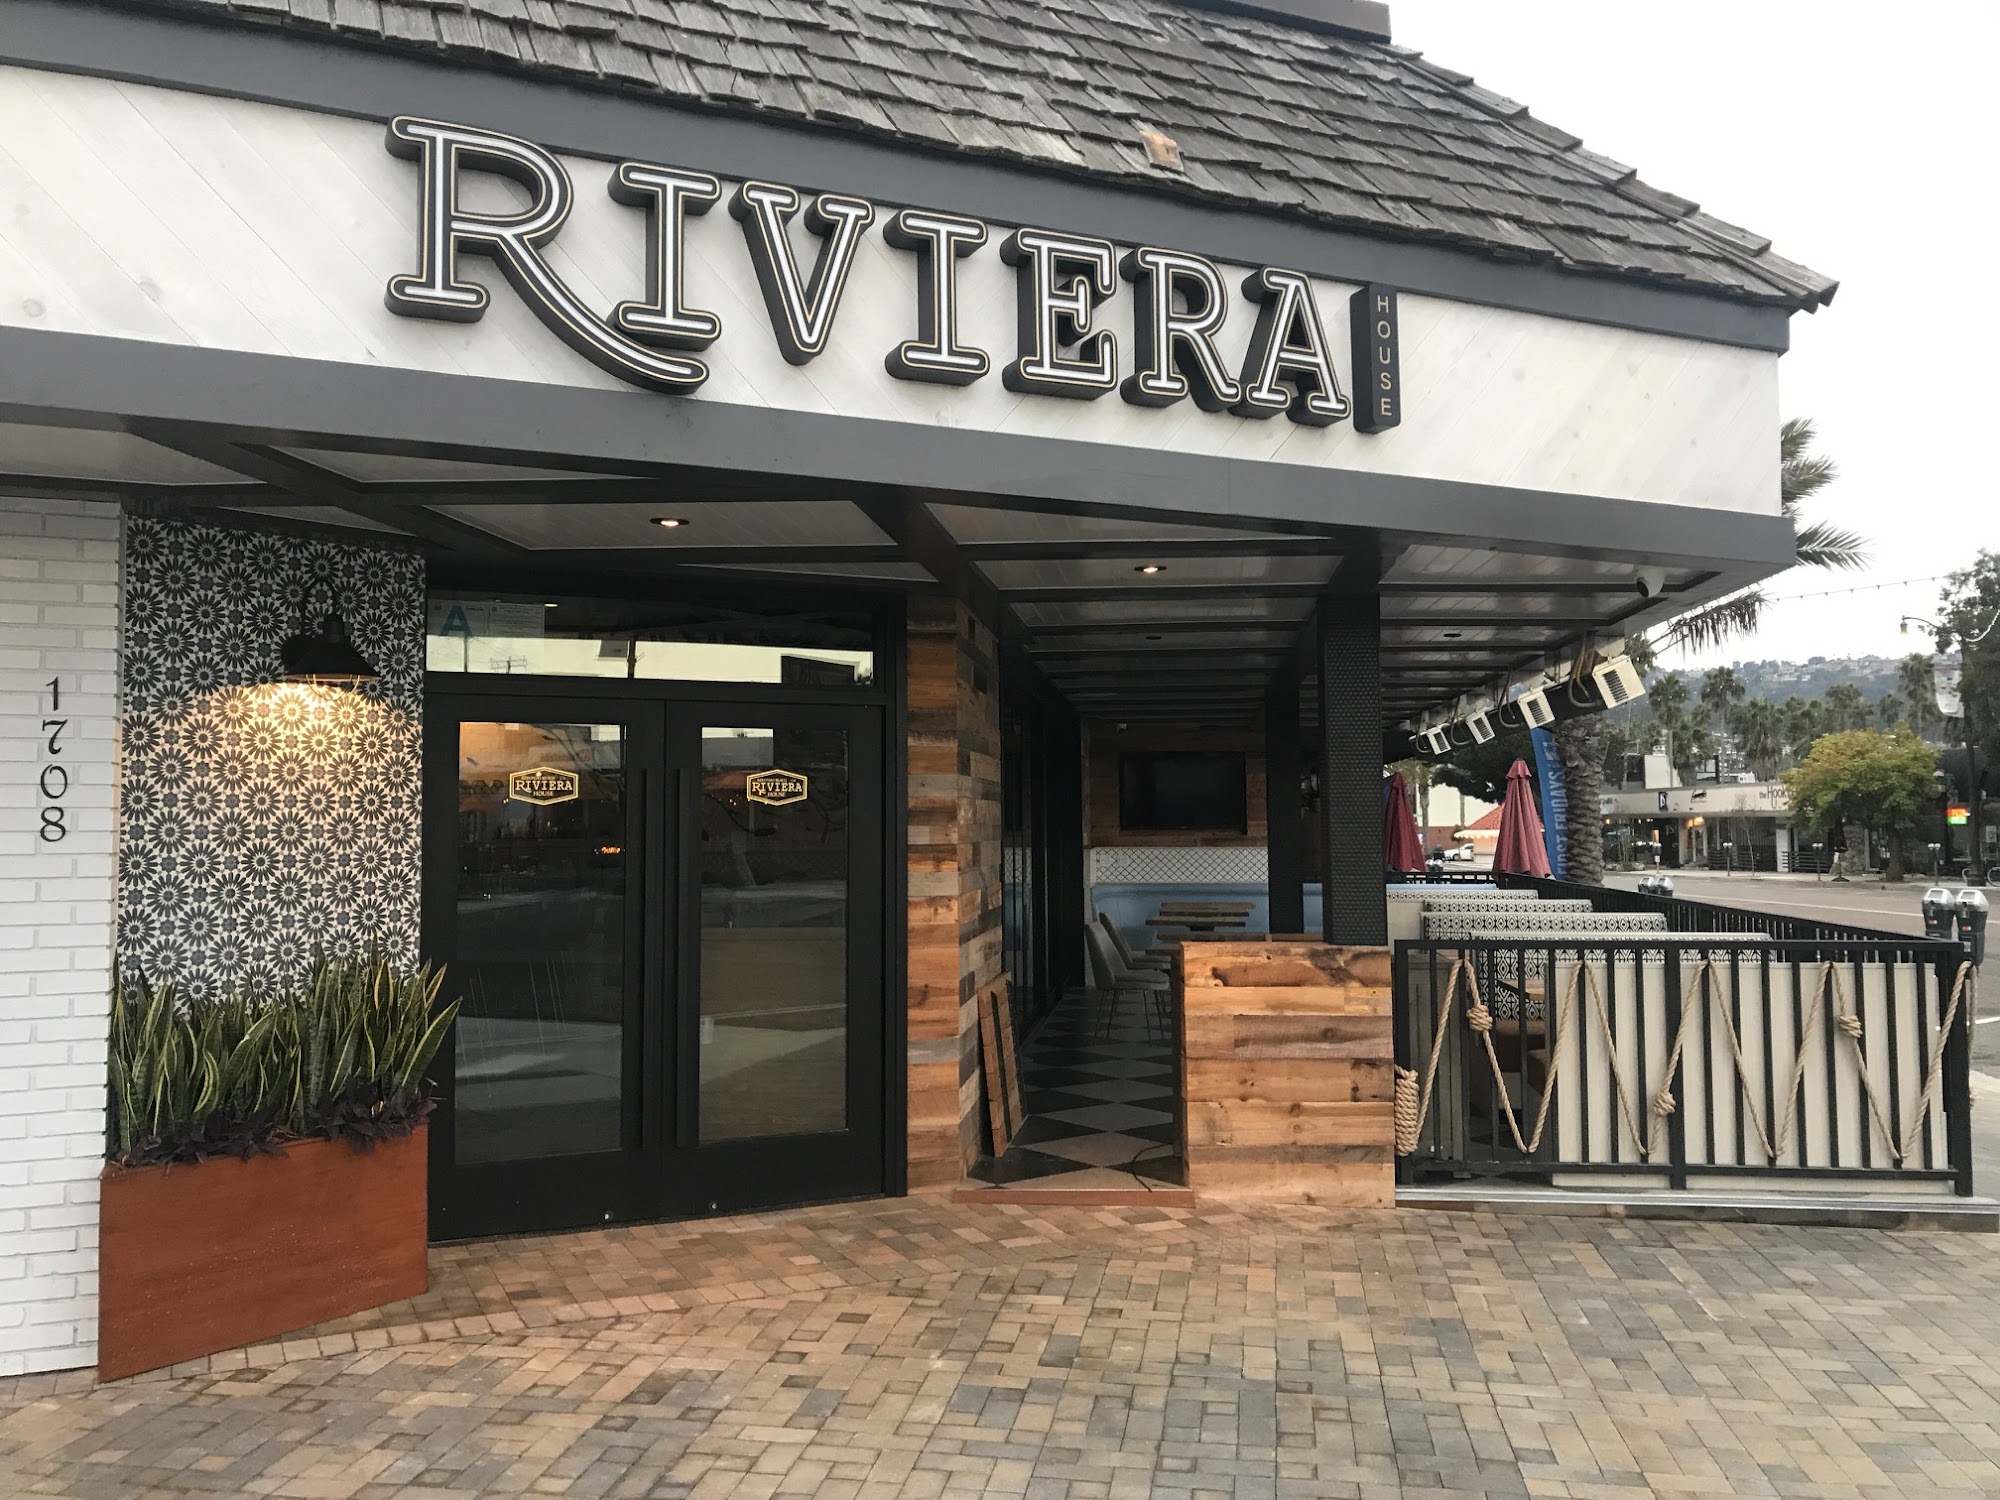 Riviera House